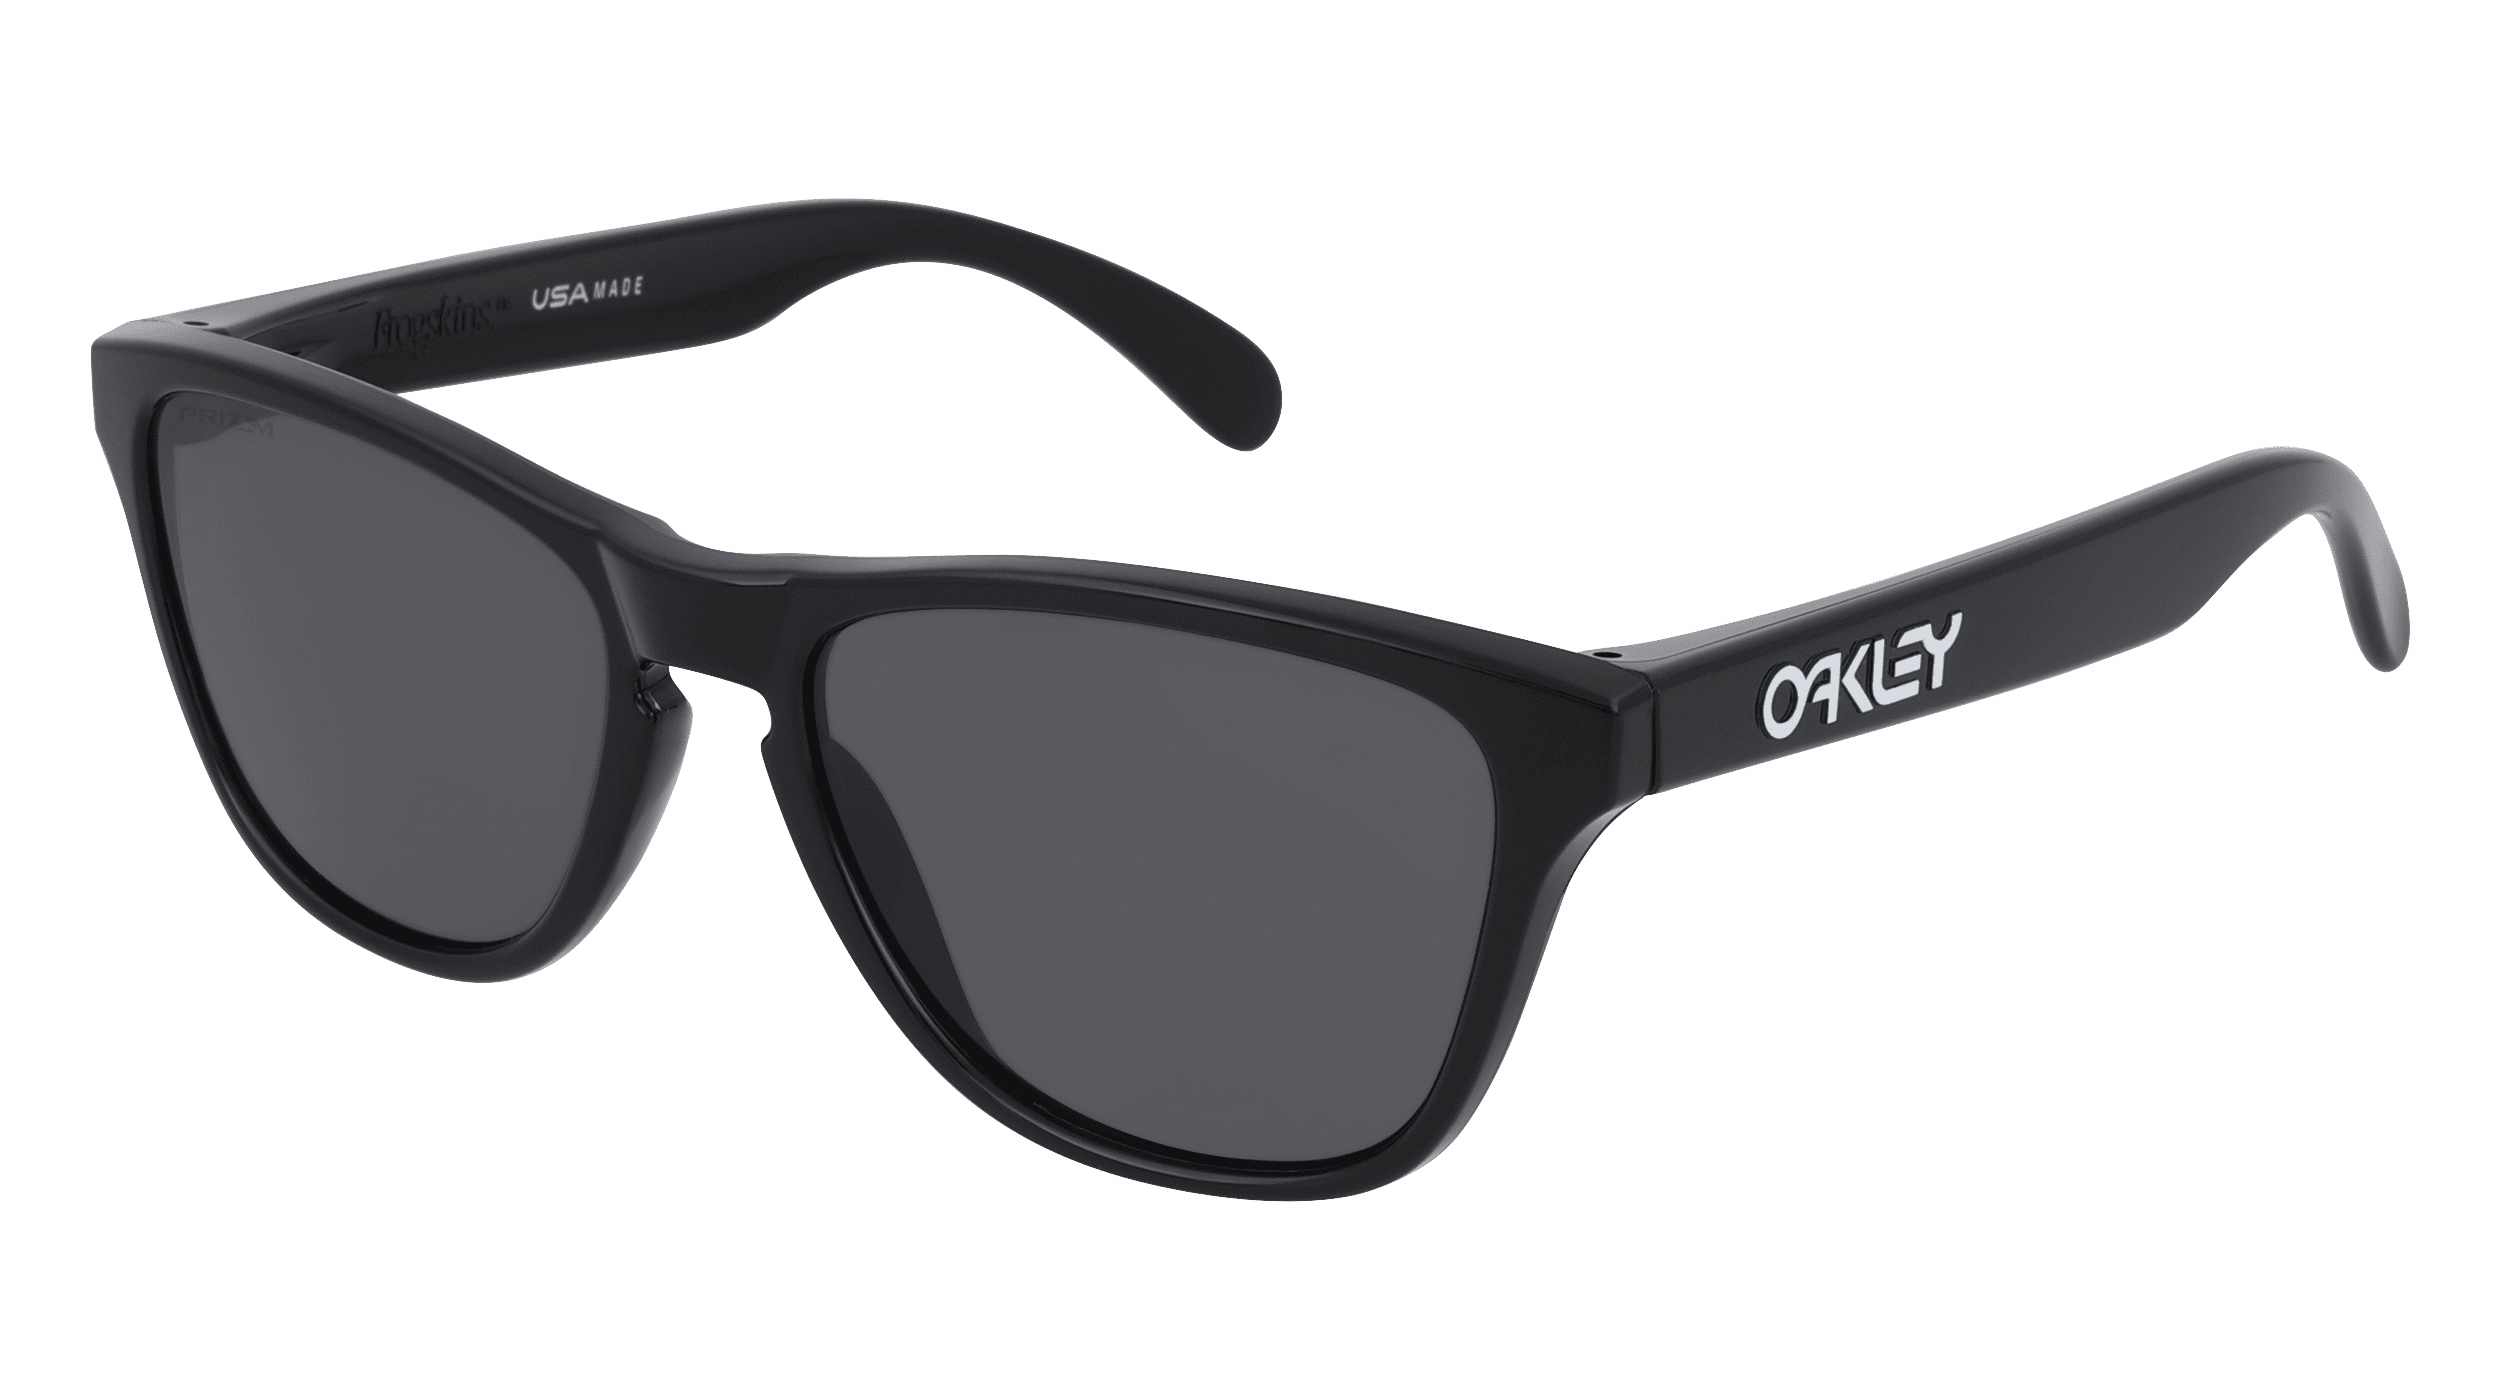 Luxottica Oakley OJ9006 Herren-Sonnenbrille Vollrand Oval Kunststoff-Gestell, schwarz